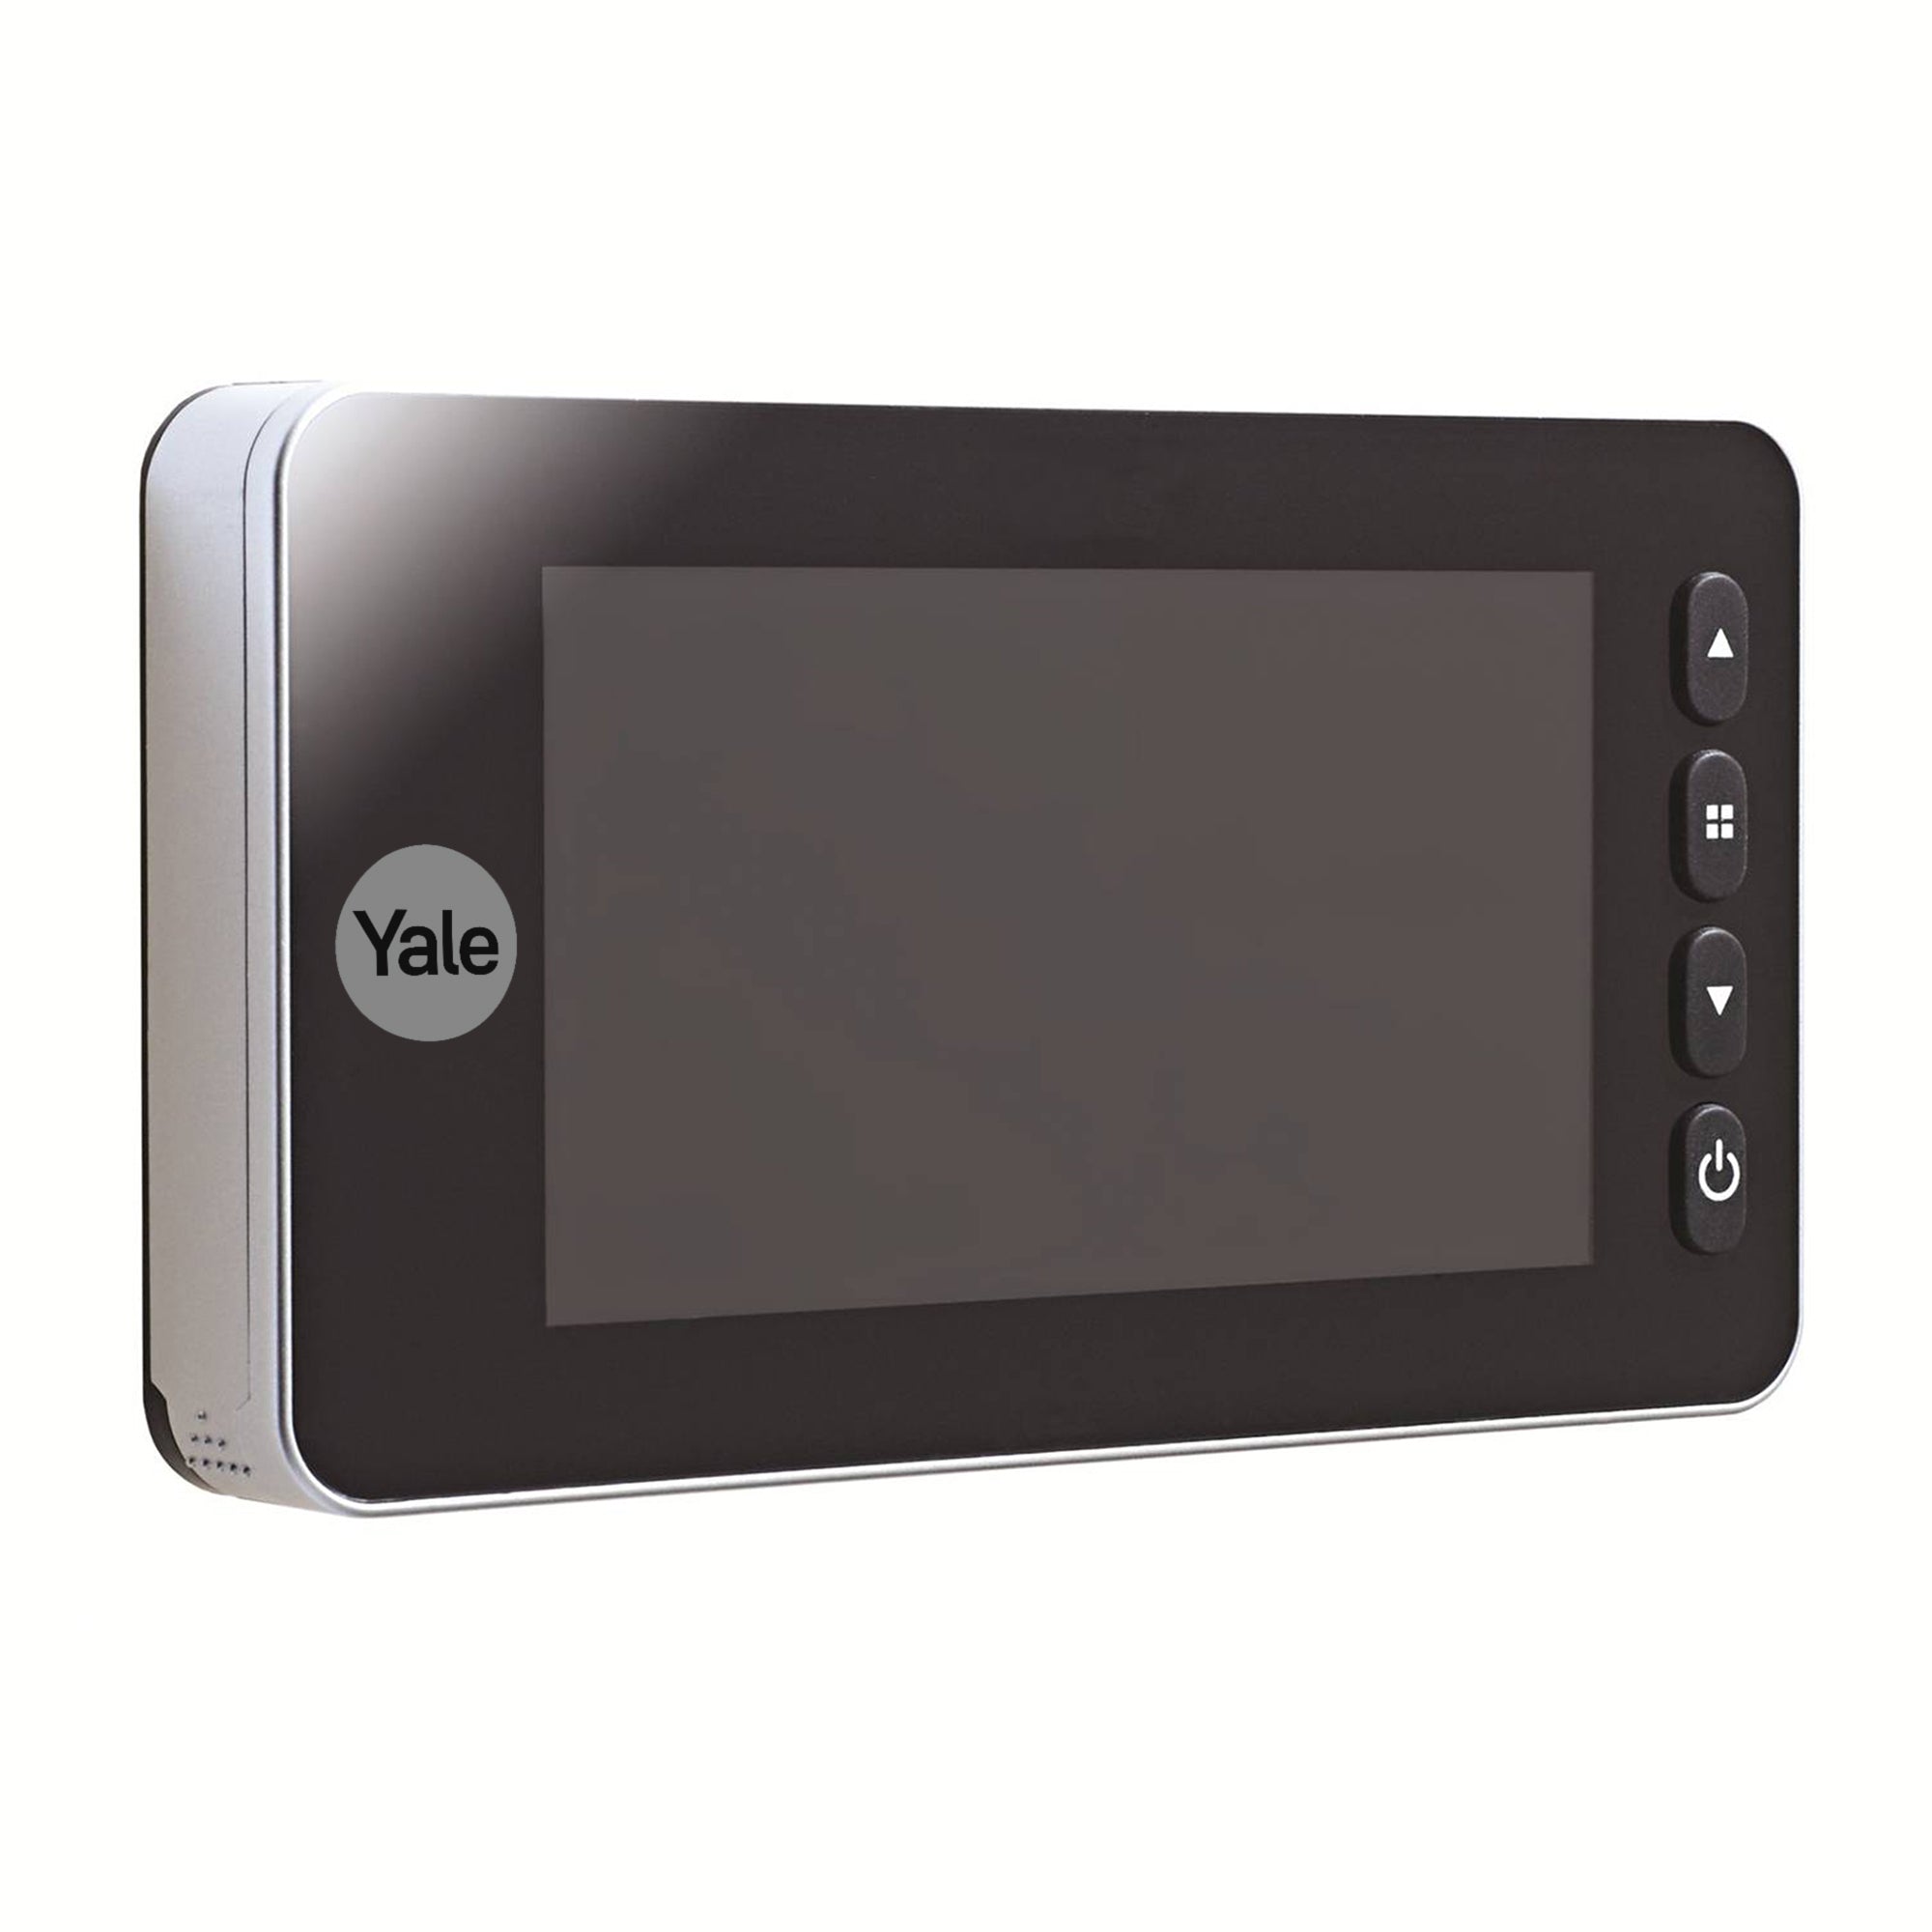 Yale Digital Door Spy DDV 5800, 4.3" Display, Silver, incl. Motion Detection, Doorbell & Night Vision